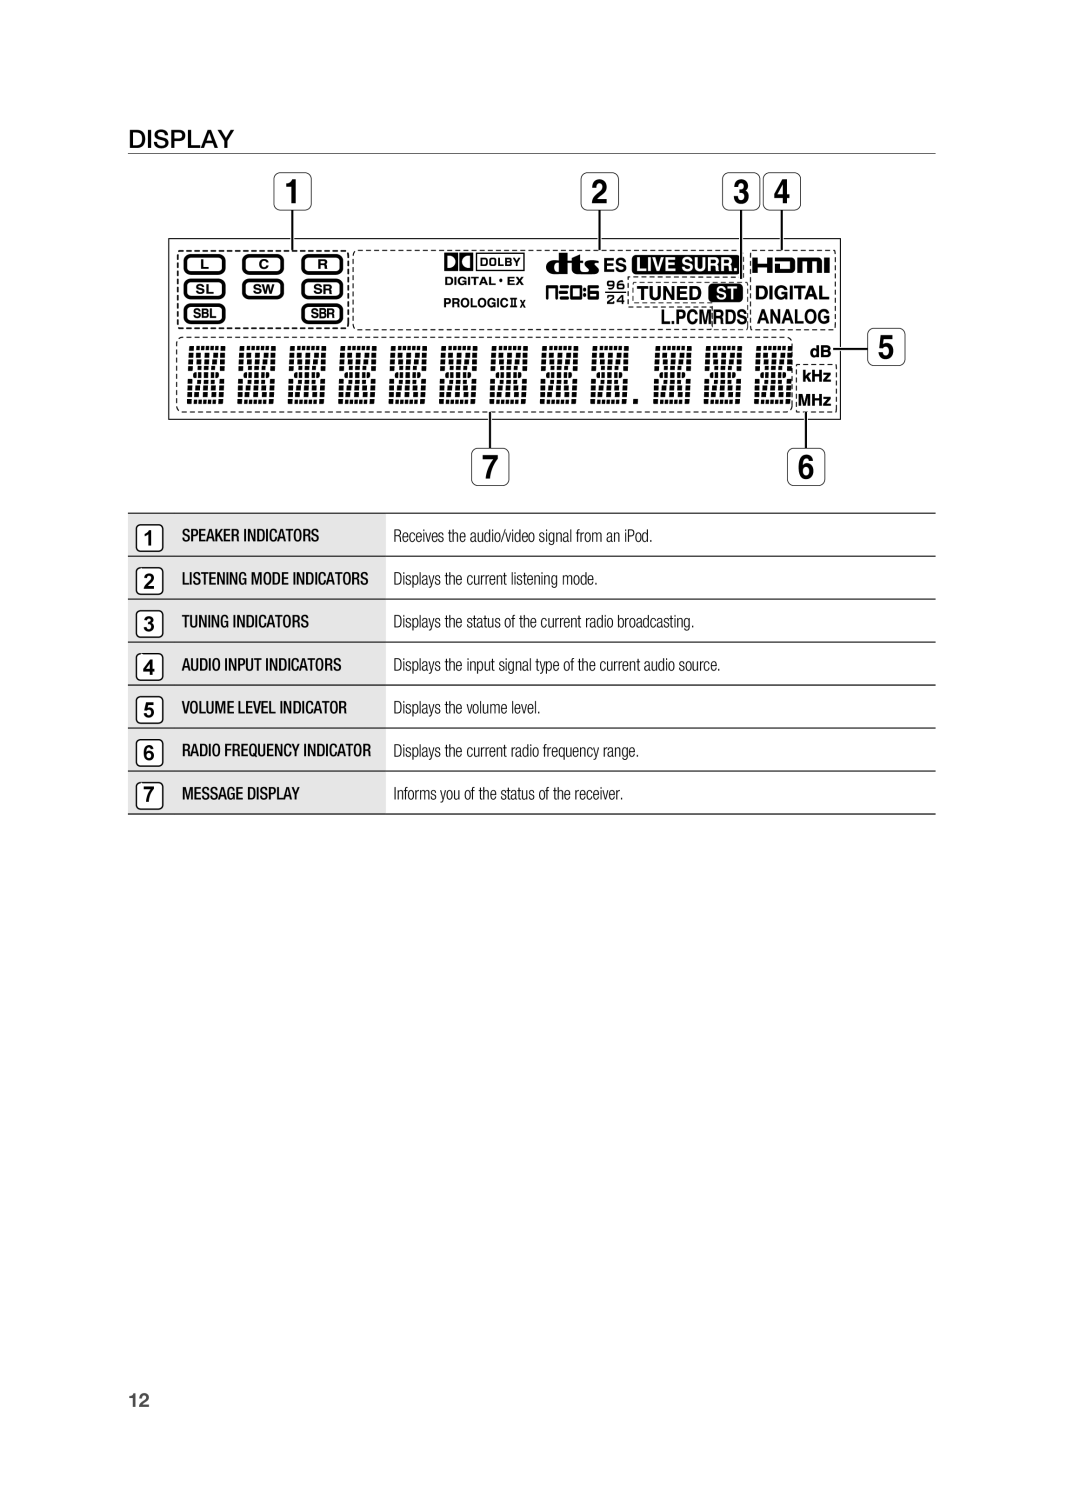 Samsung HT-AS730S user manual Display 